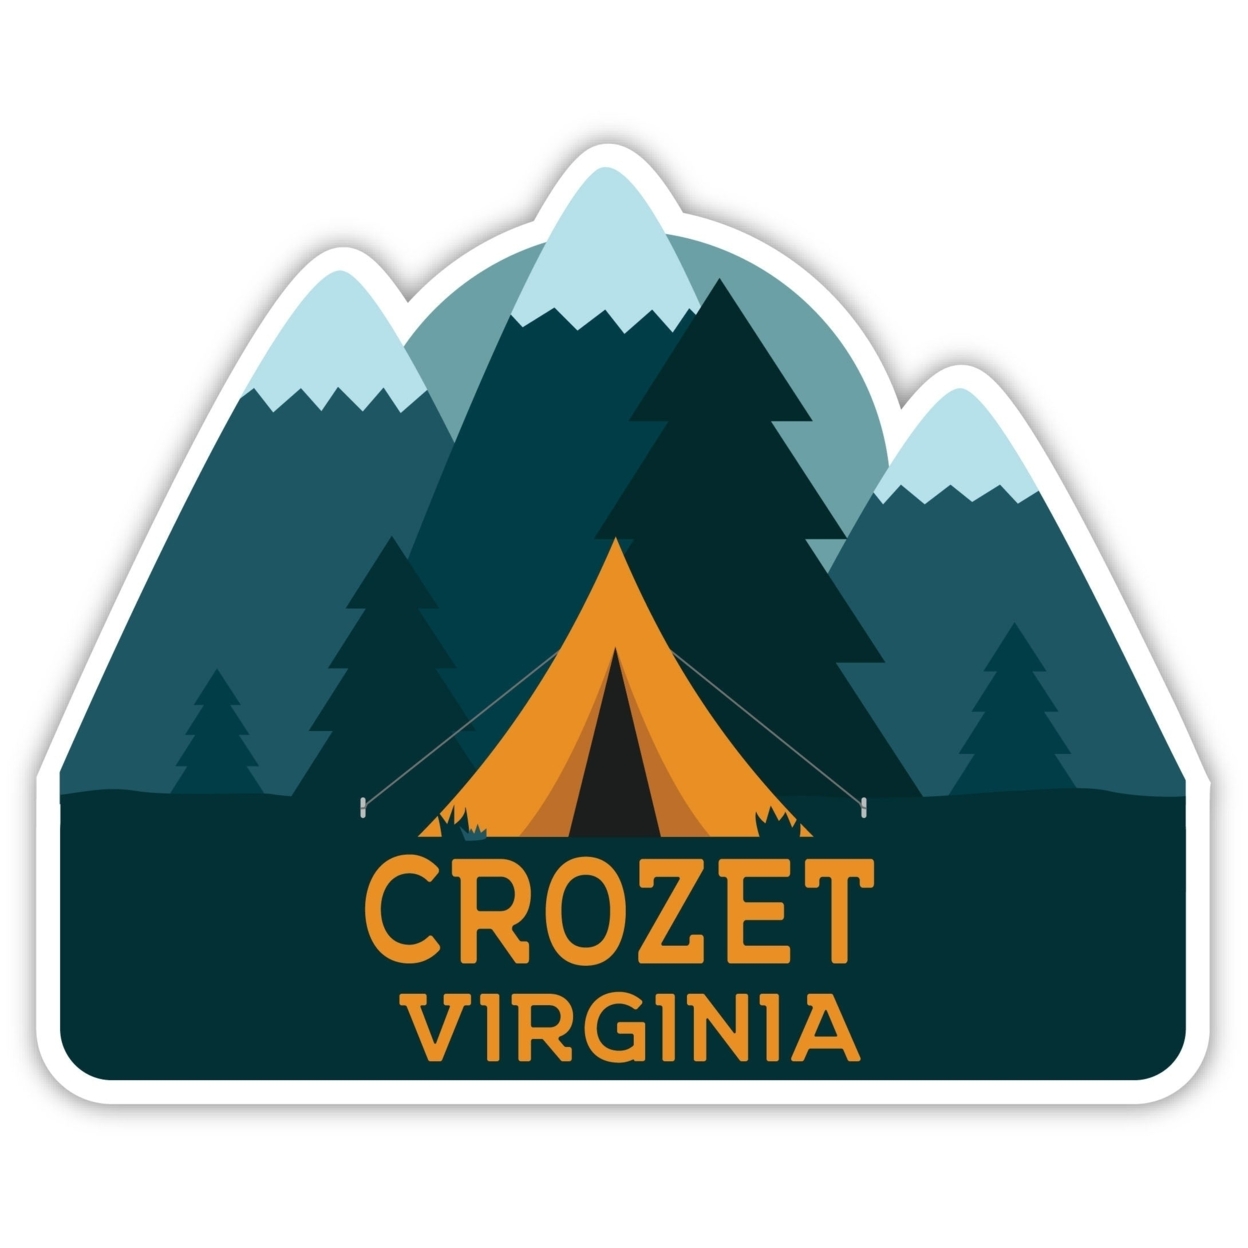 Crozet Virginia Souvenir Decorative Stickers (Choose Theme And Size) - 4-Pack, 4-Inch, Tent